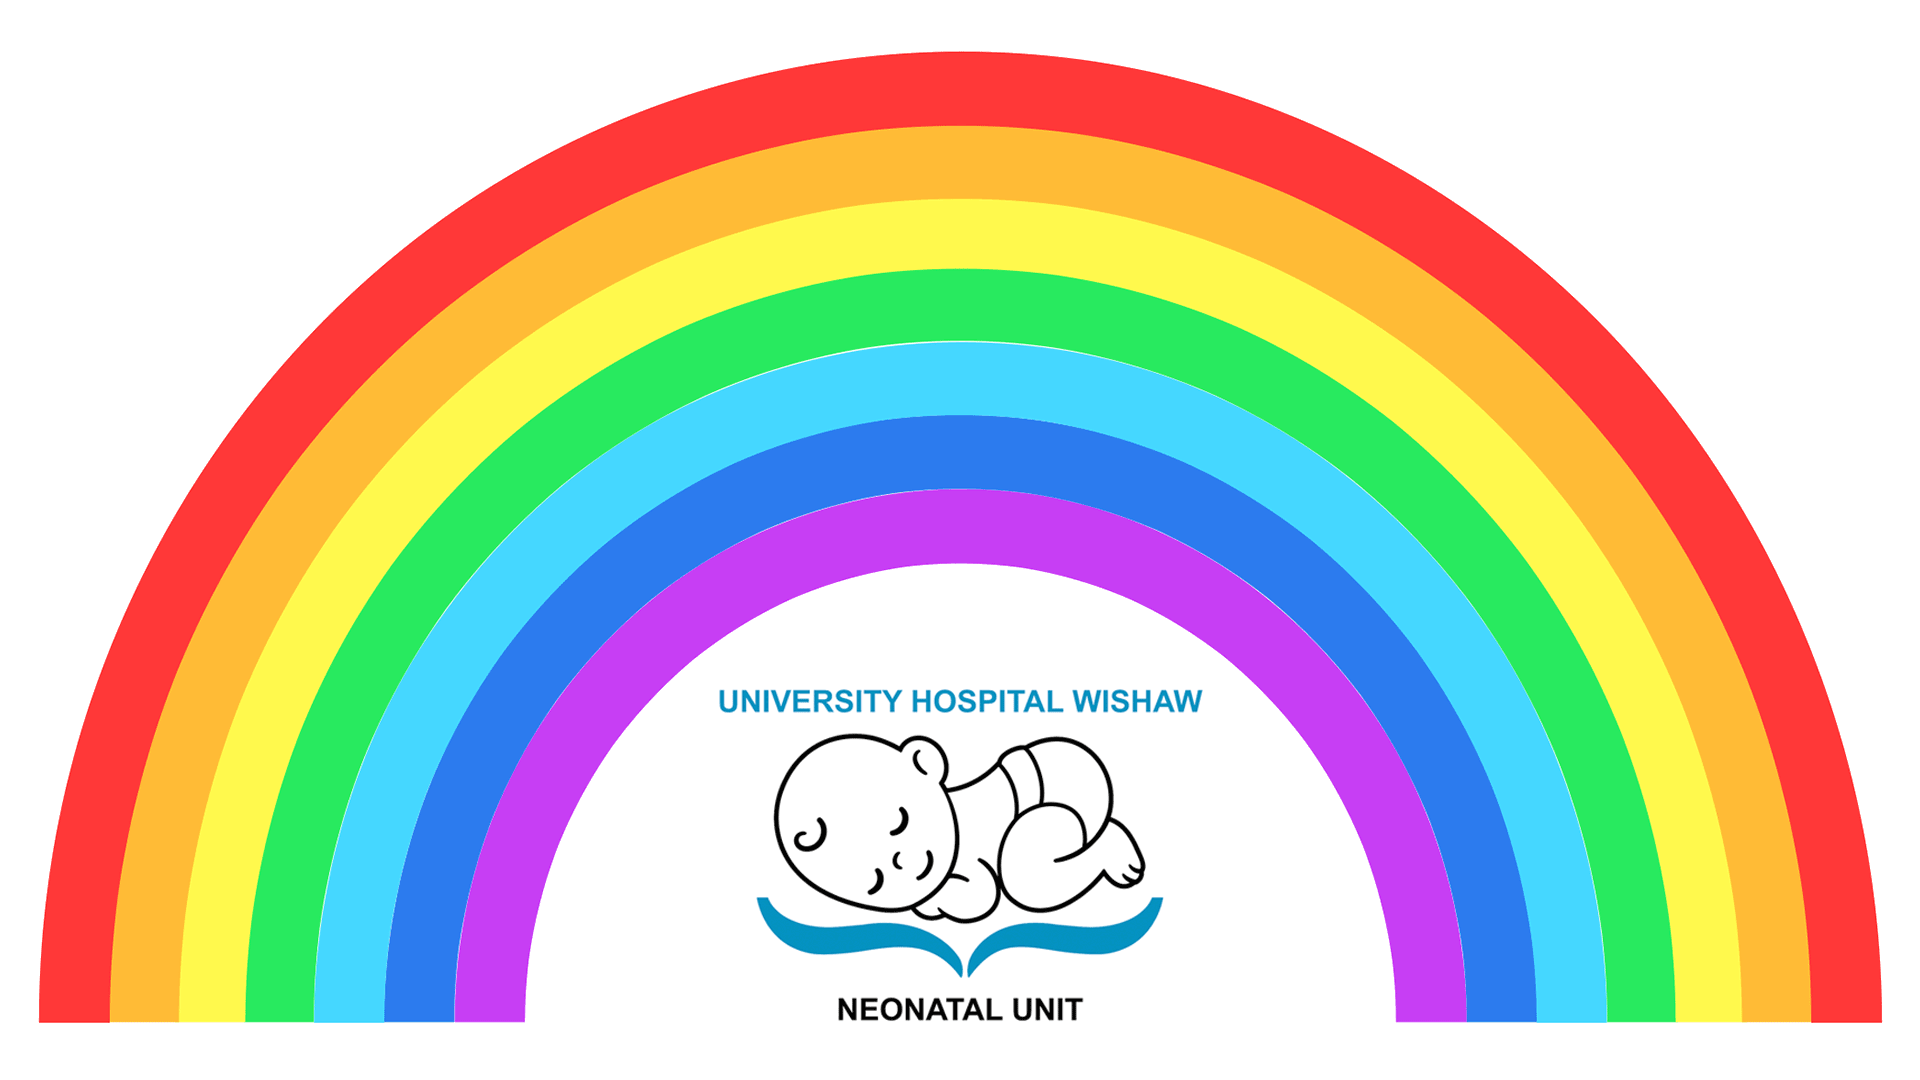 University Hospital Wishaw, Neonatal Unit logo